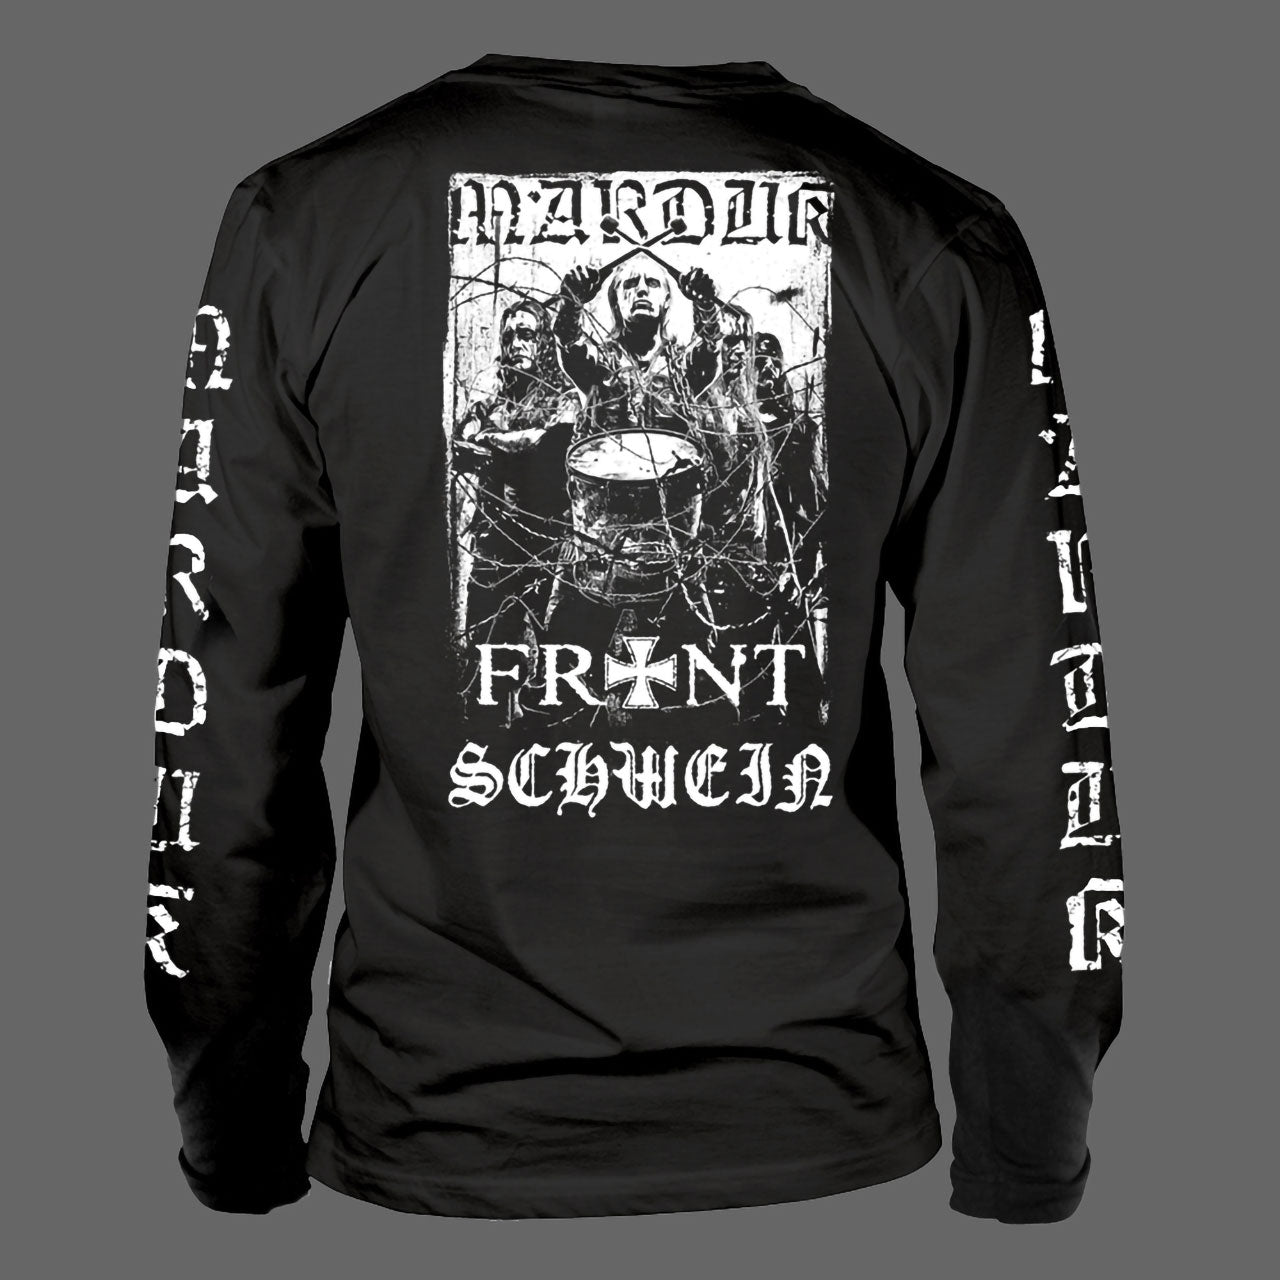 Marduk - Frontschwein (Shield) (Long Sleeve T-Shirt)